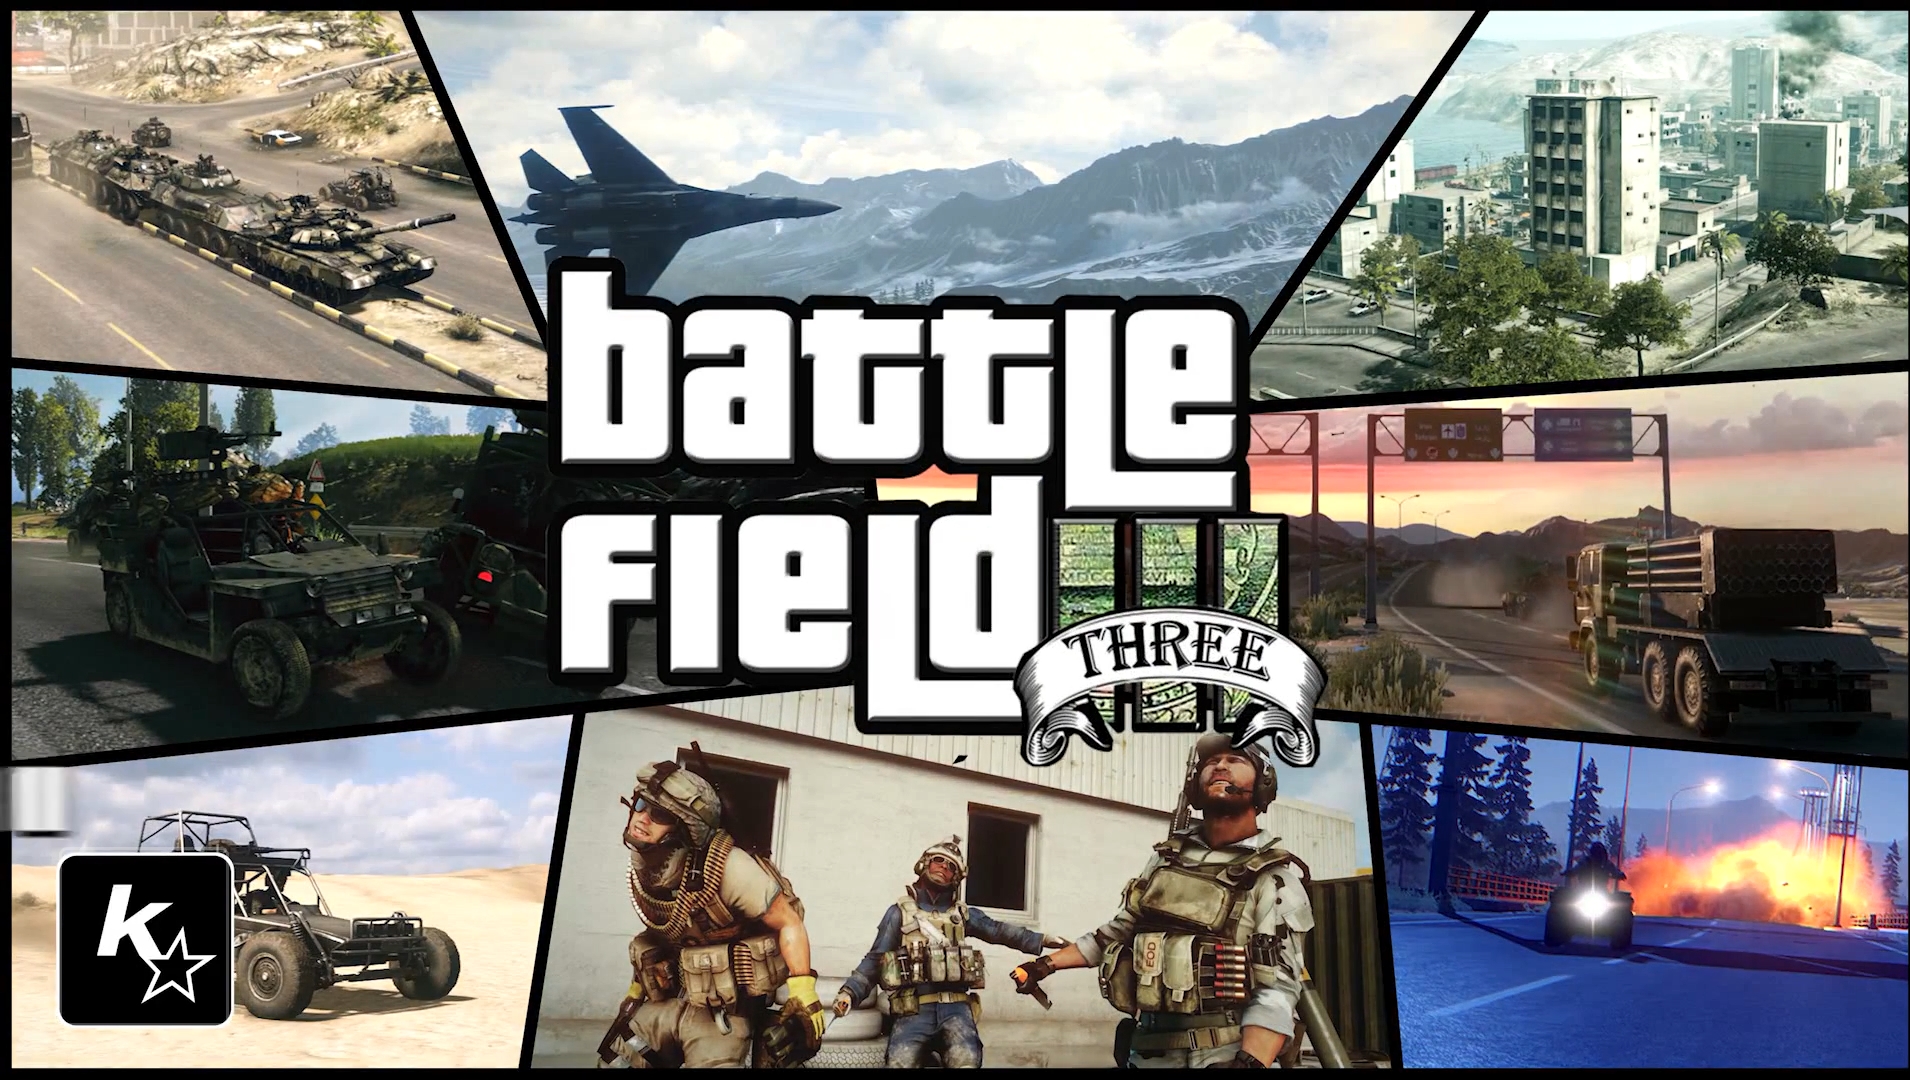 GTA V in Battlefield 3 – Trailer parody